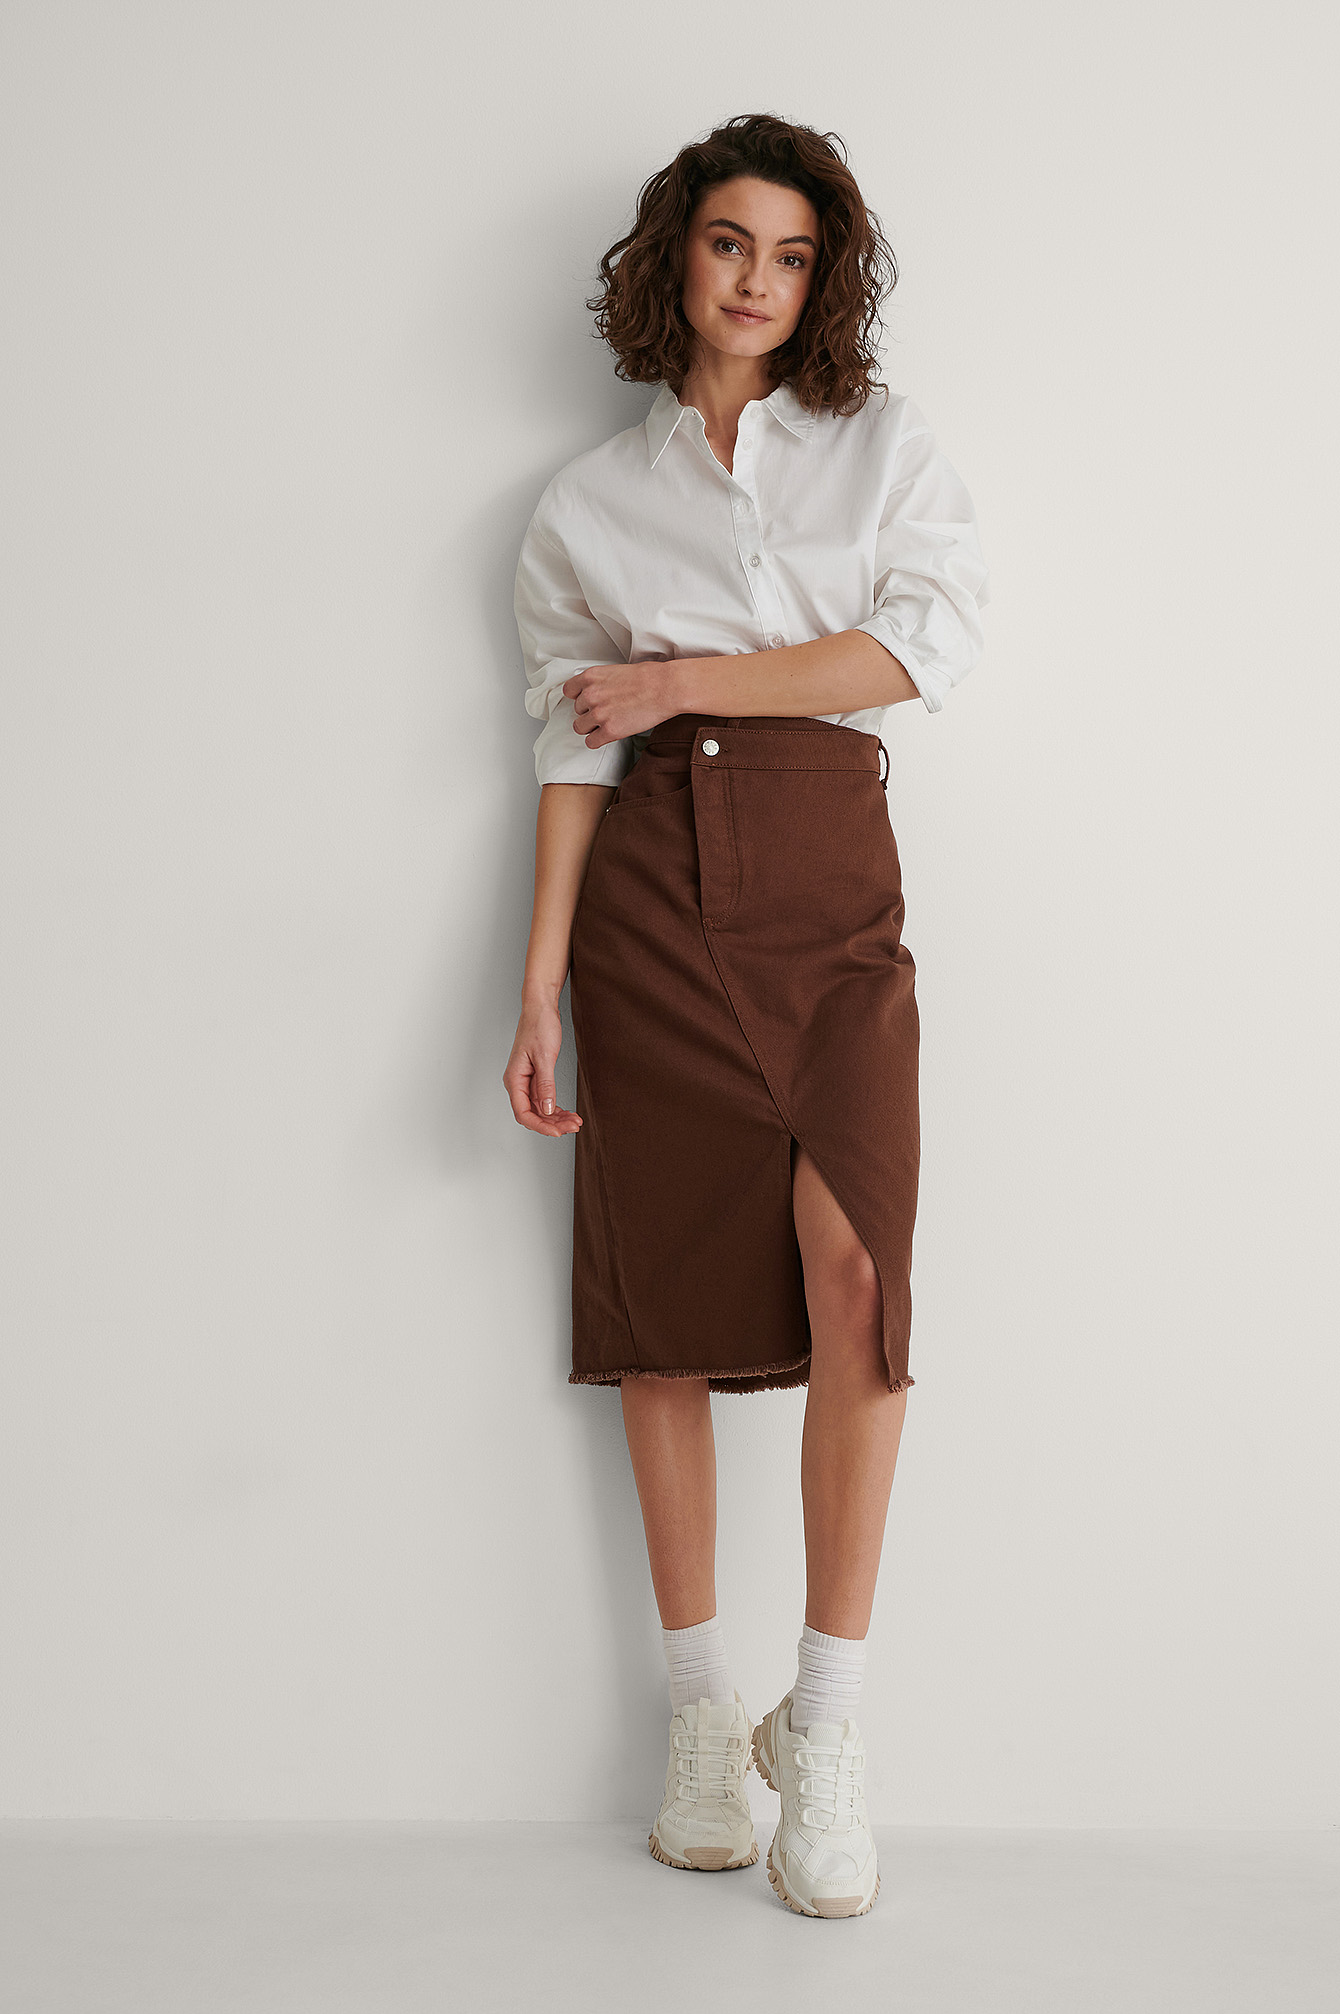 Asymmetric Denim Skirt Outfit.